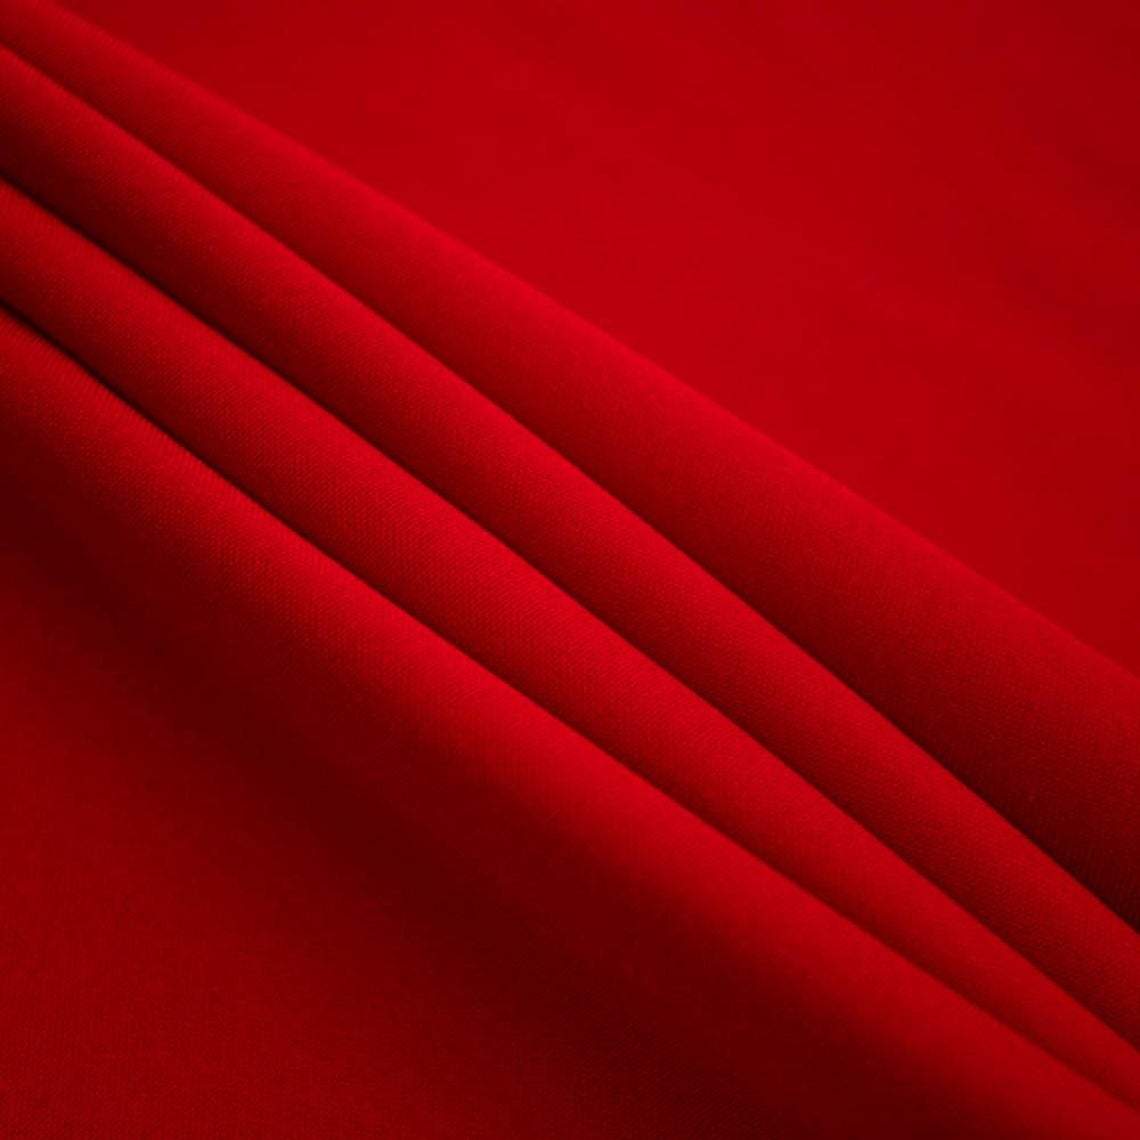 Wholesale Poly Poplin Fabric RedICE FABRICSICE FABRICSBy The Roll (60" Wide)Wholesale Red Poly Poplin Fabric ICE FABRICS